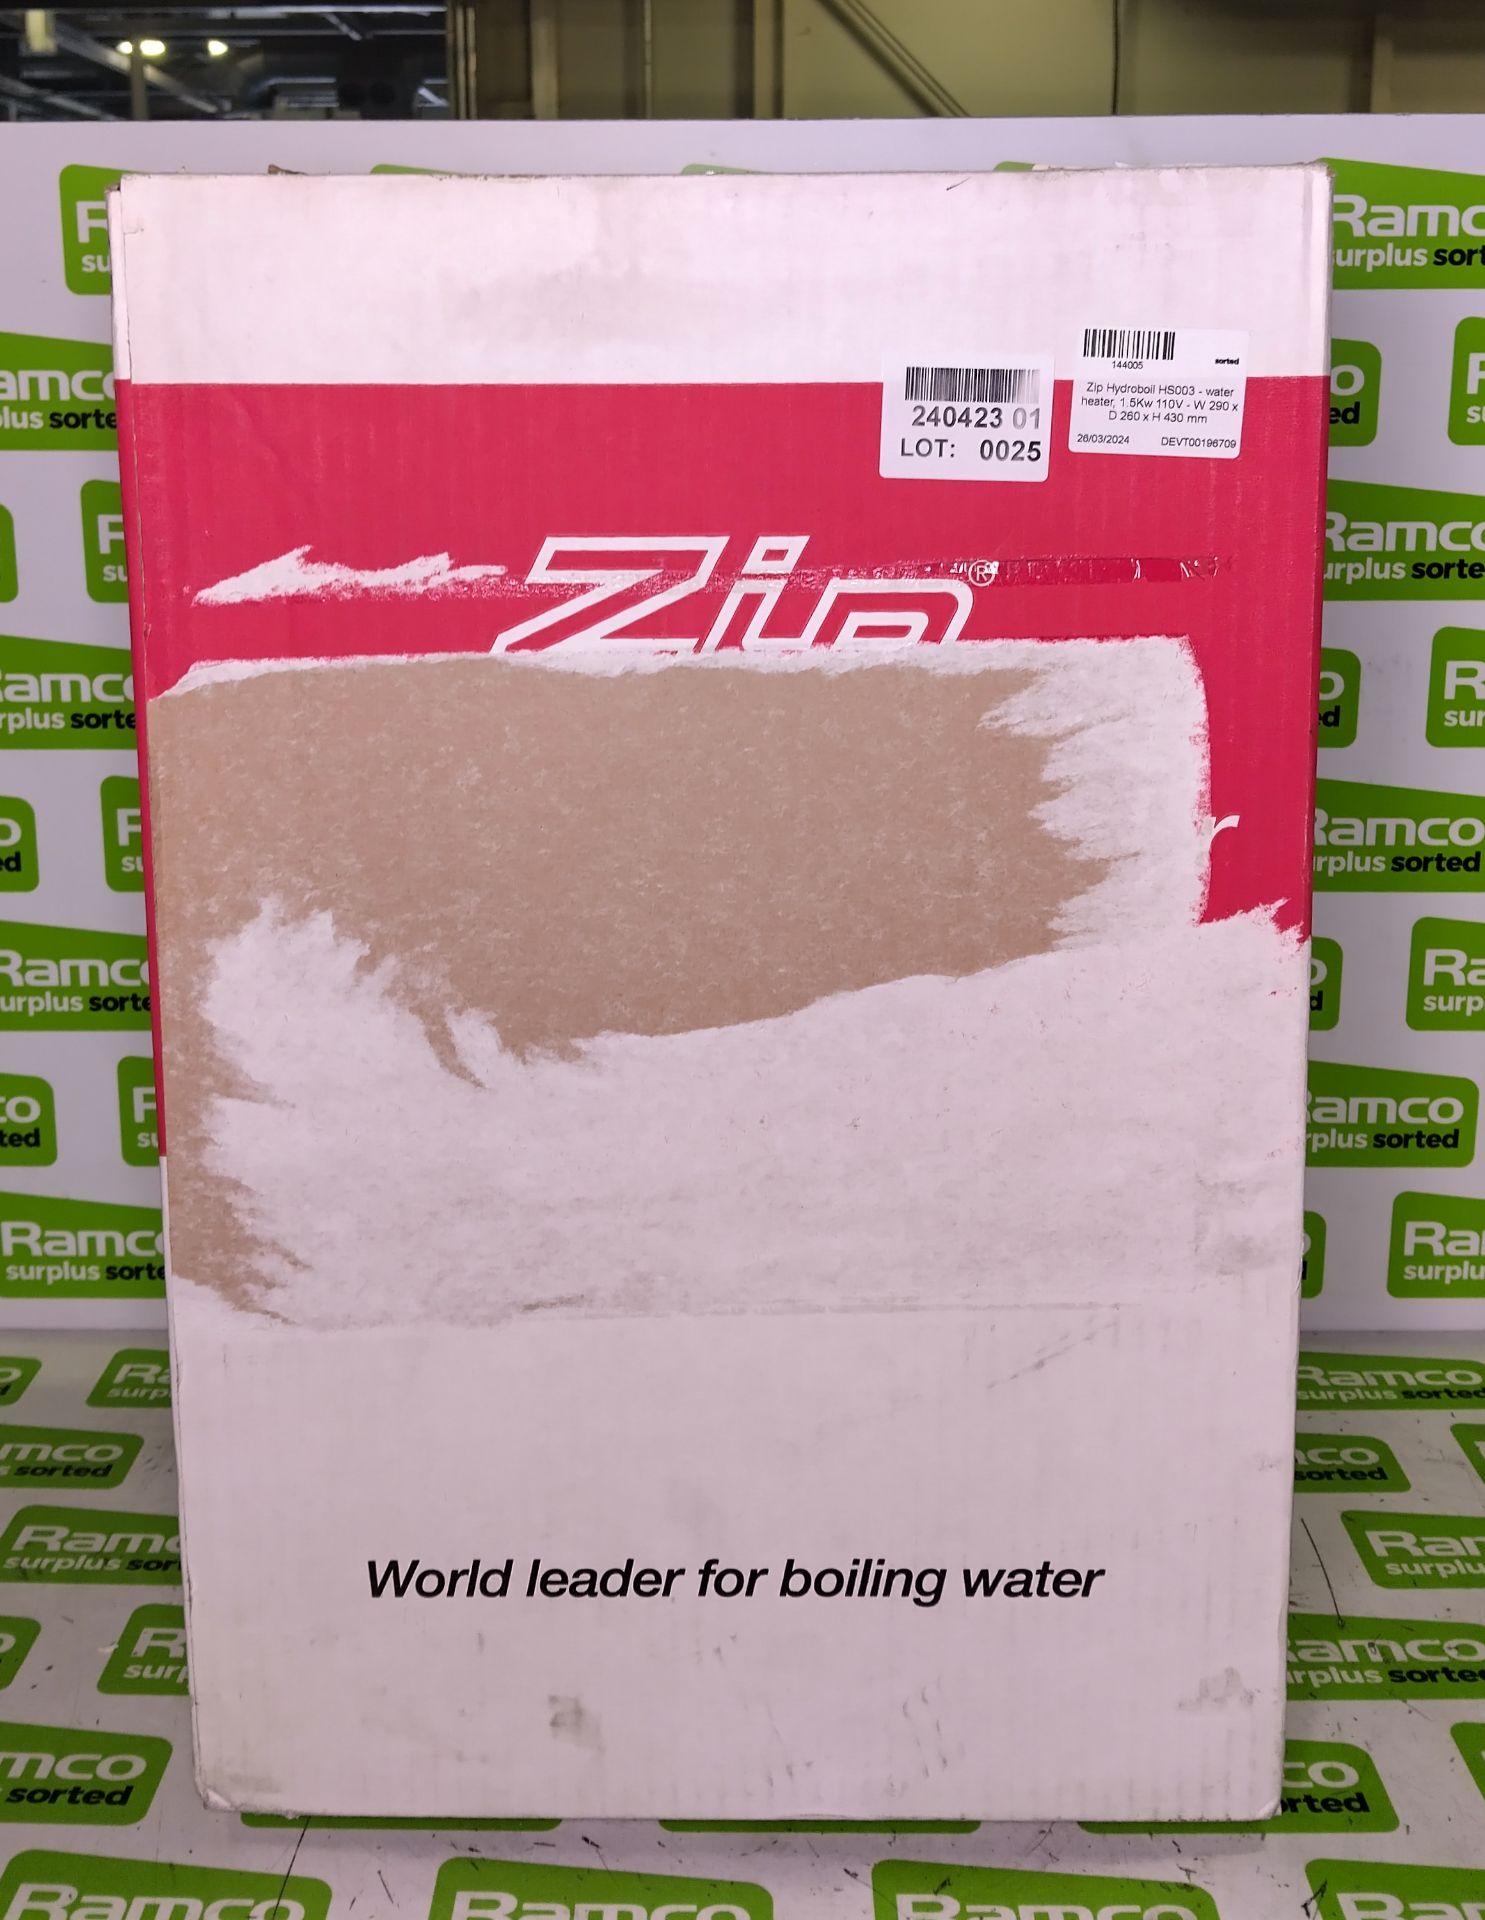 Zip Hydroboil HS003 - water heater - 1.5kW - 110V - W 290 x D 260 x H 430mm - Image 2 of 3